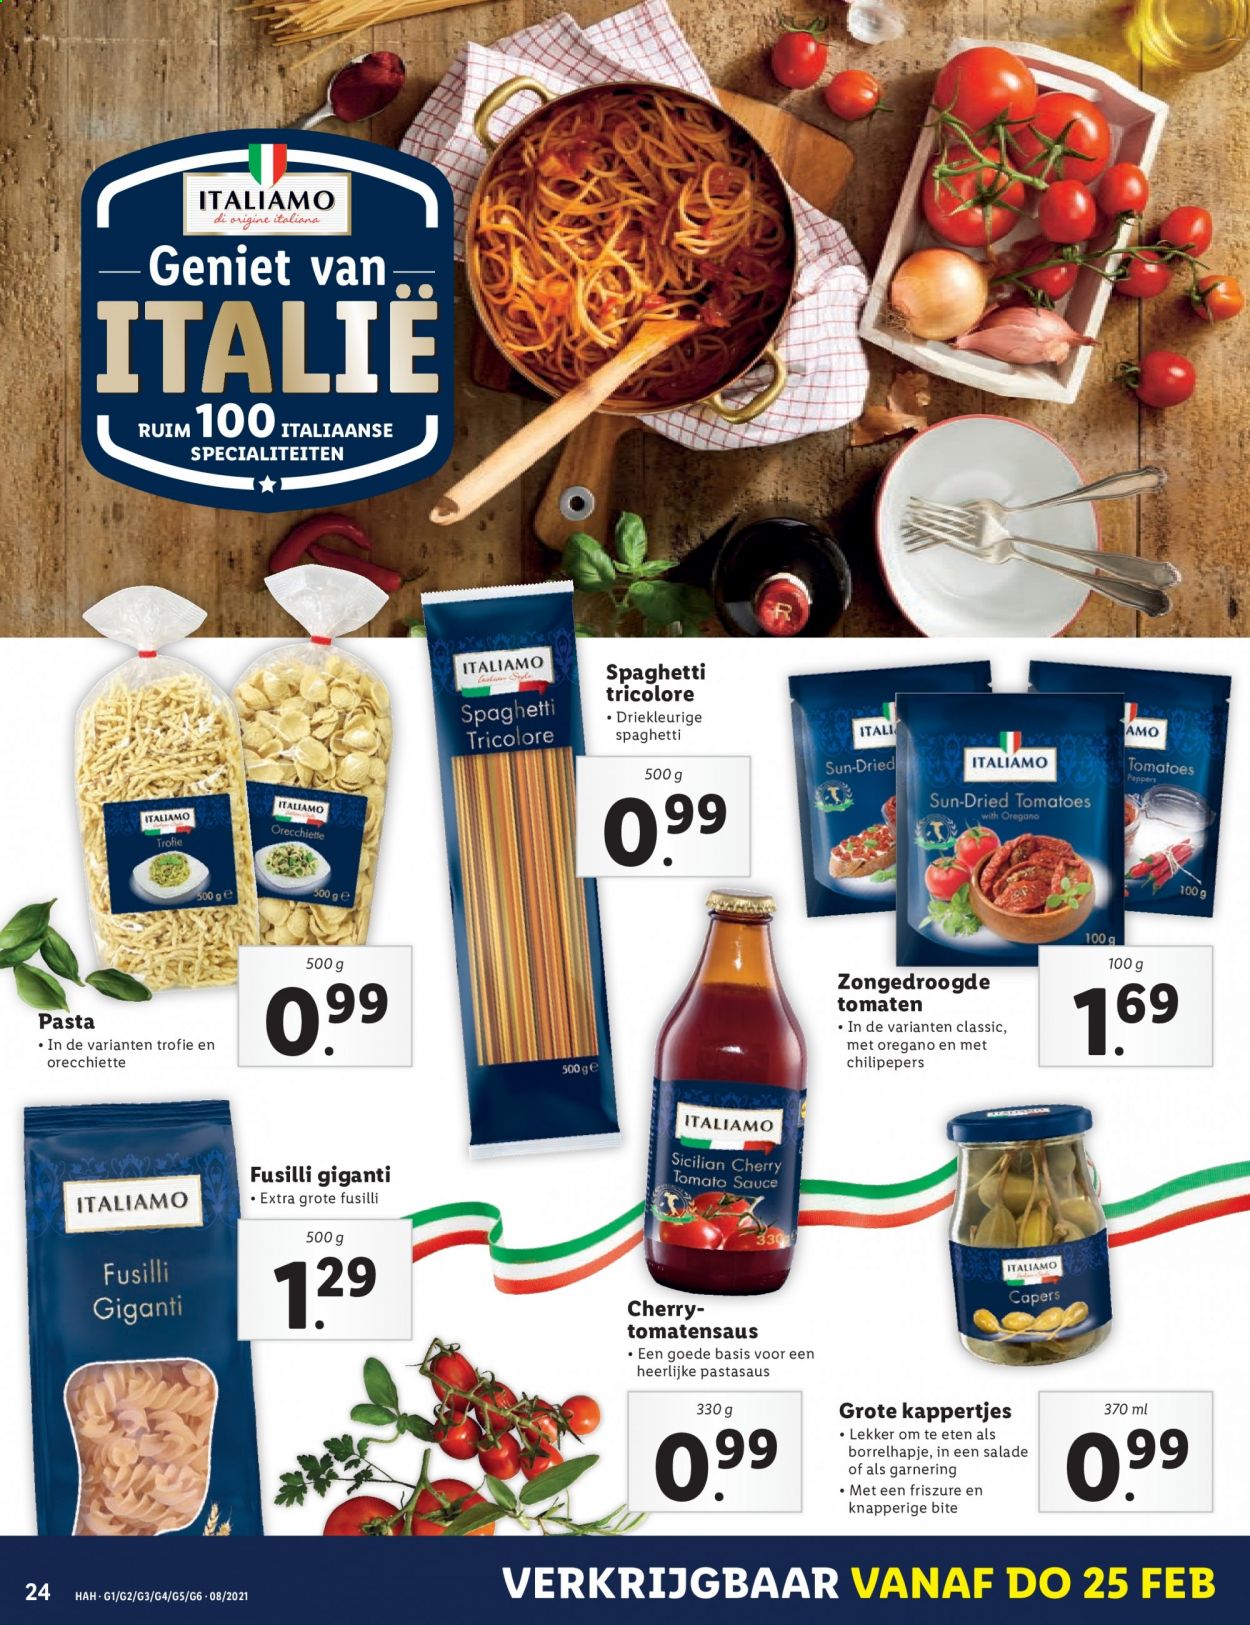 thumbnail - Lidl-aanbieding - 22-2-2021 - 28-2-2021 -  producten in de aanbieding - Italiamo, kappertjes, tomatensaus, pasta, spaghetti, fusilli, oregano. Pagina 25.